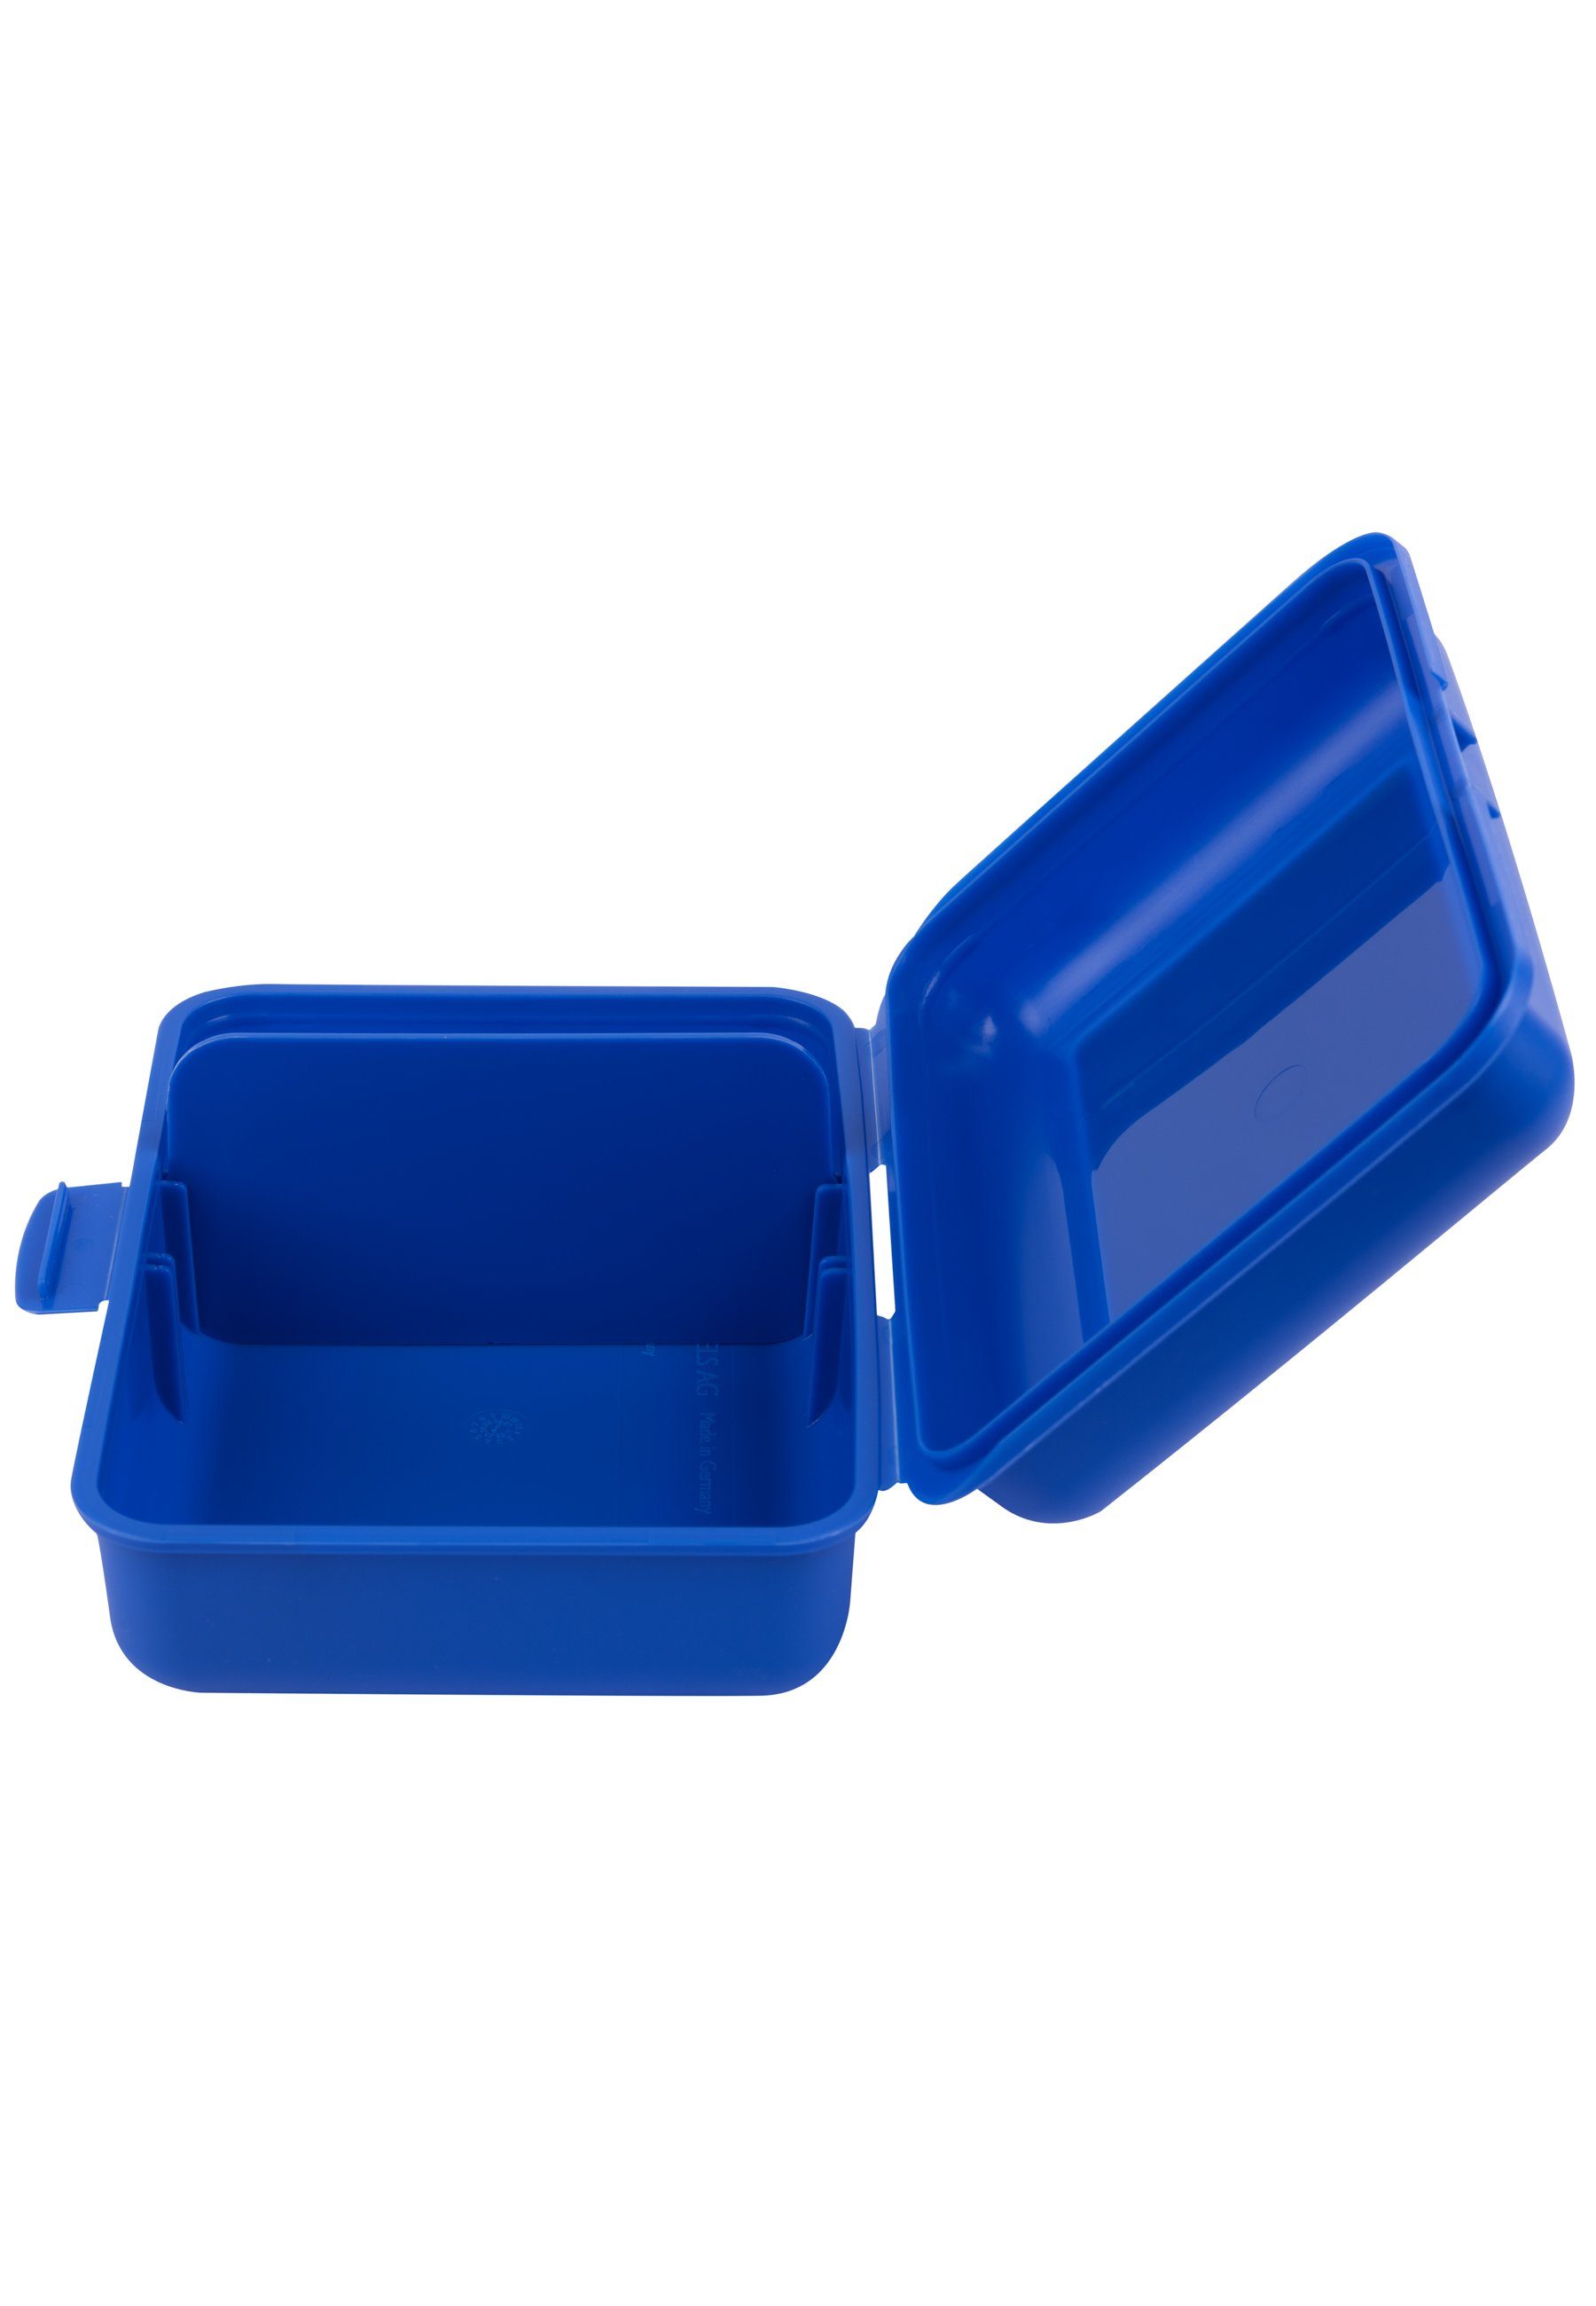 Blau, Trennwand (PP) mit Lunchbox Hot Labels® - United Club Wheels Lunchbox Kunststoff - Brotdose Speed